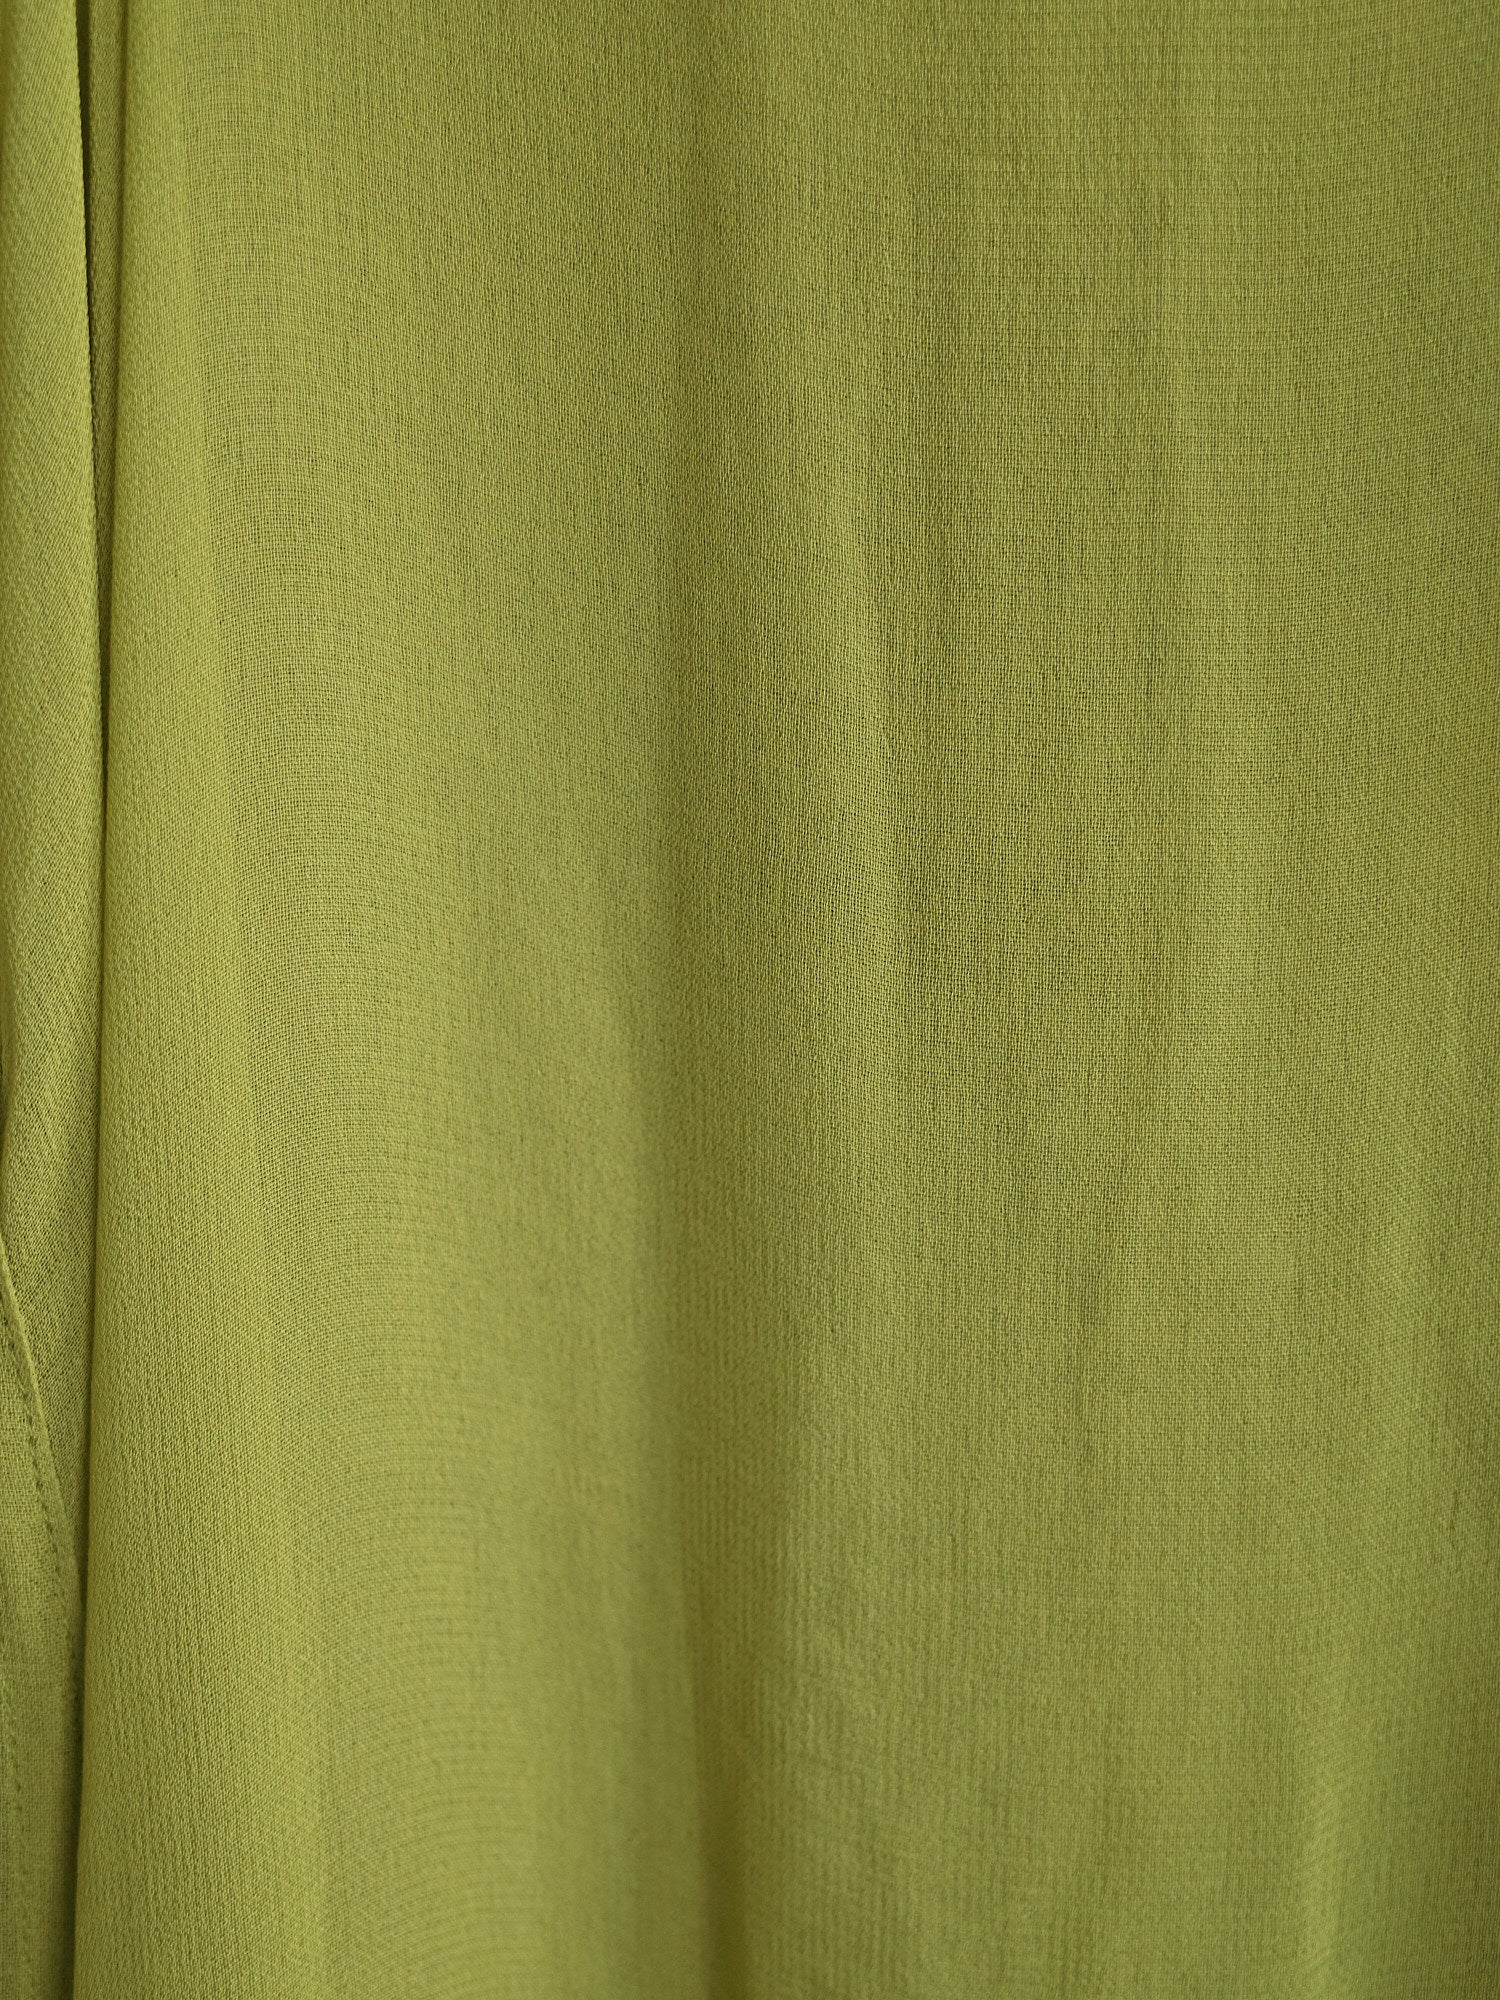 Jil Sander 1980s green sheer viscose camisole top - womens size 38